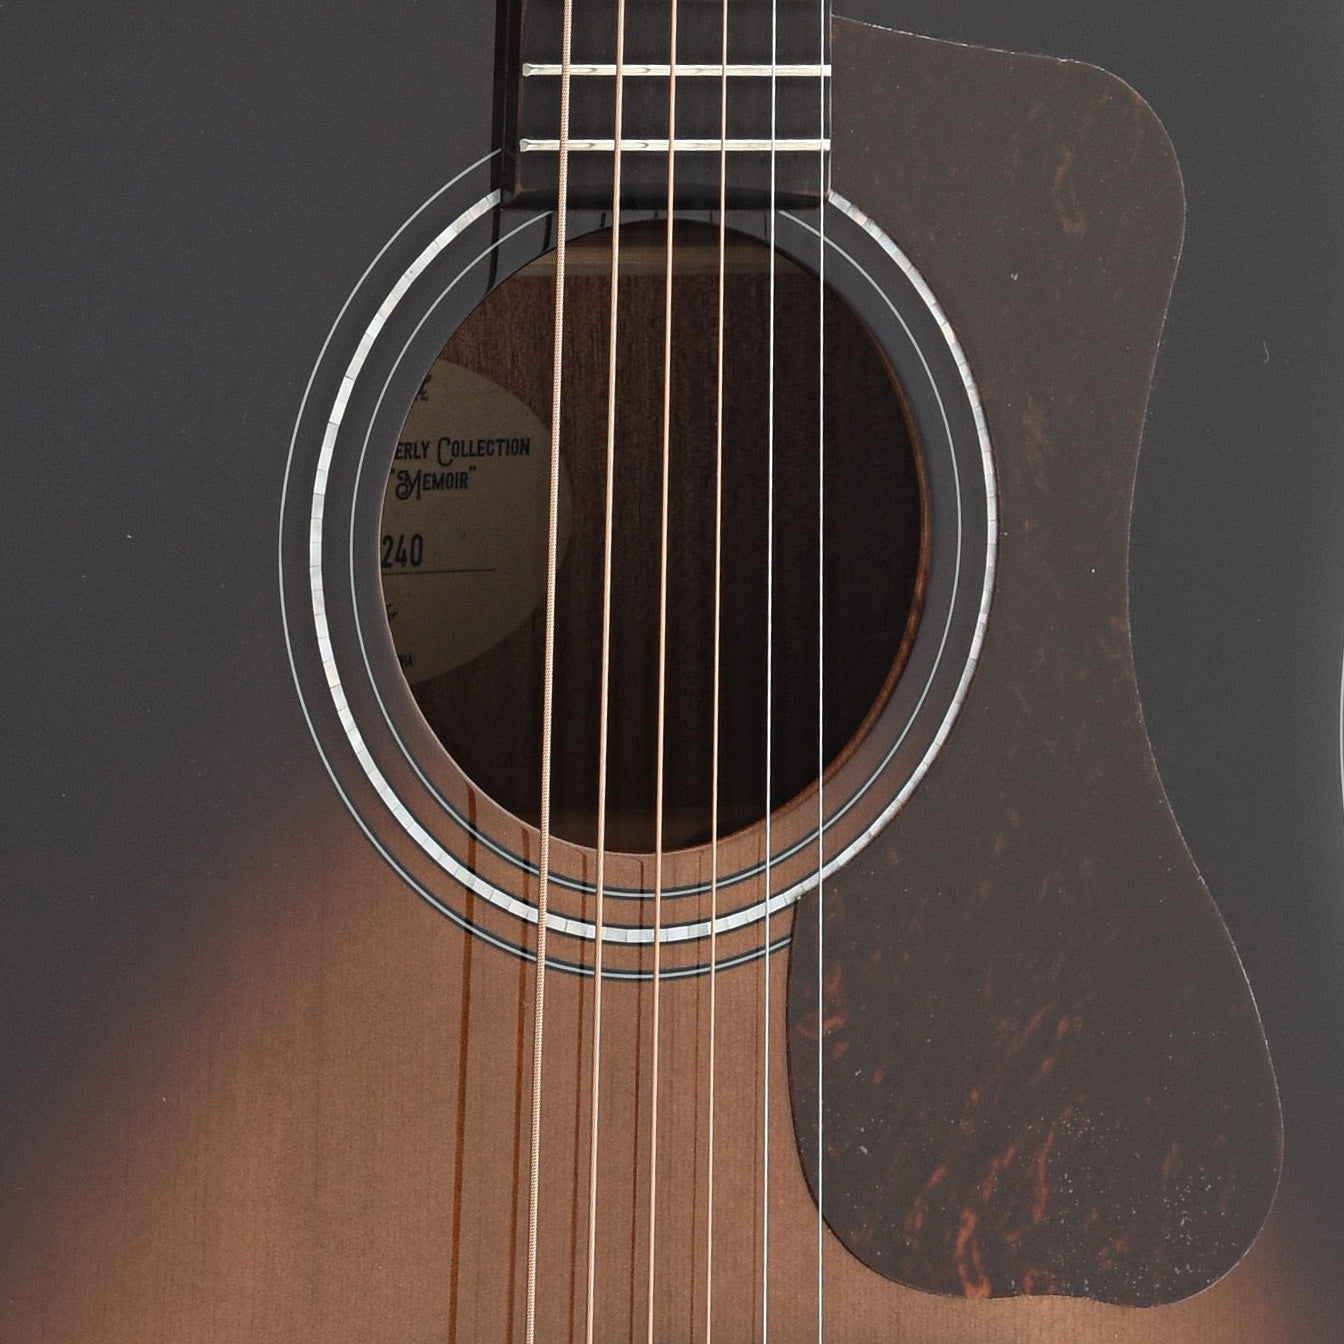 Soundhole and Pickguard of Guild Memoir Series DS-240 Slope Shoulder Dreadnought Acoustic Guitar